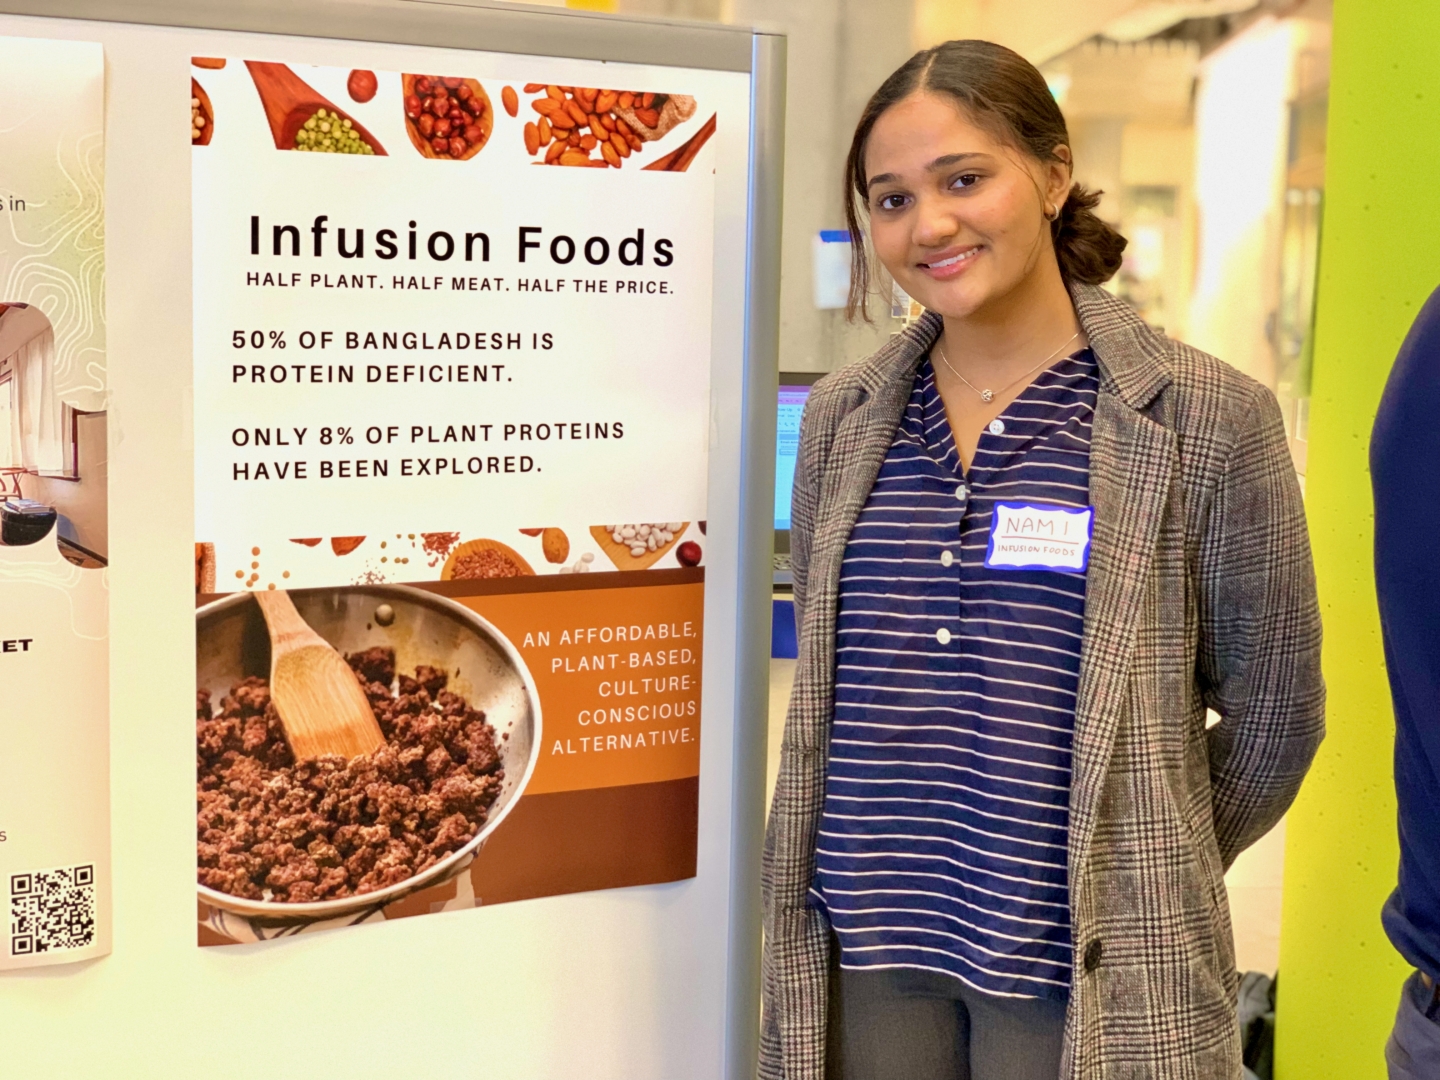 Namirah Quadir with "Infusion Foods"